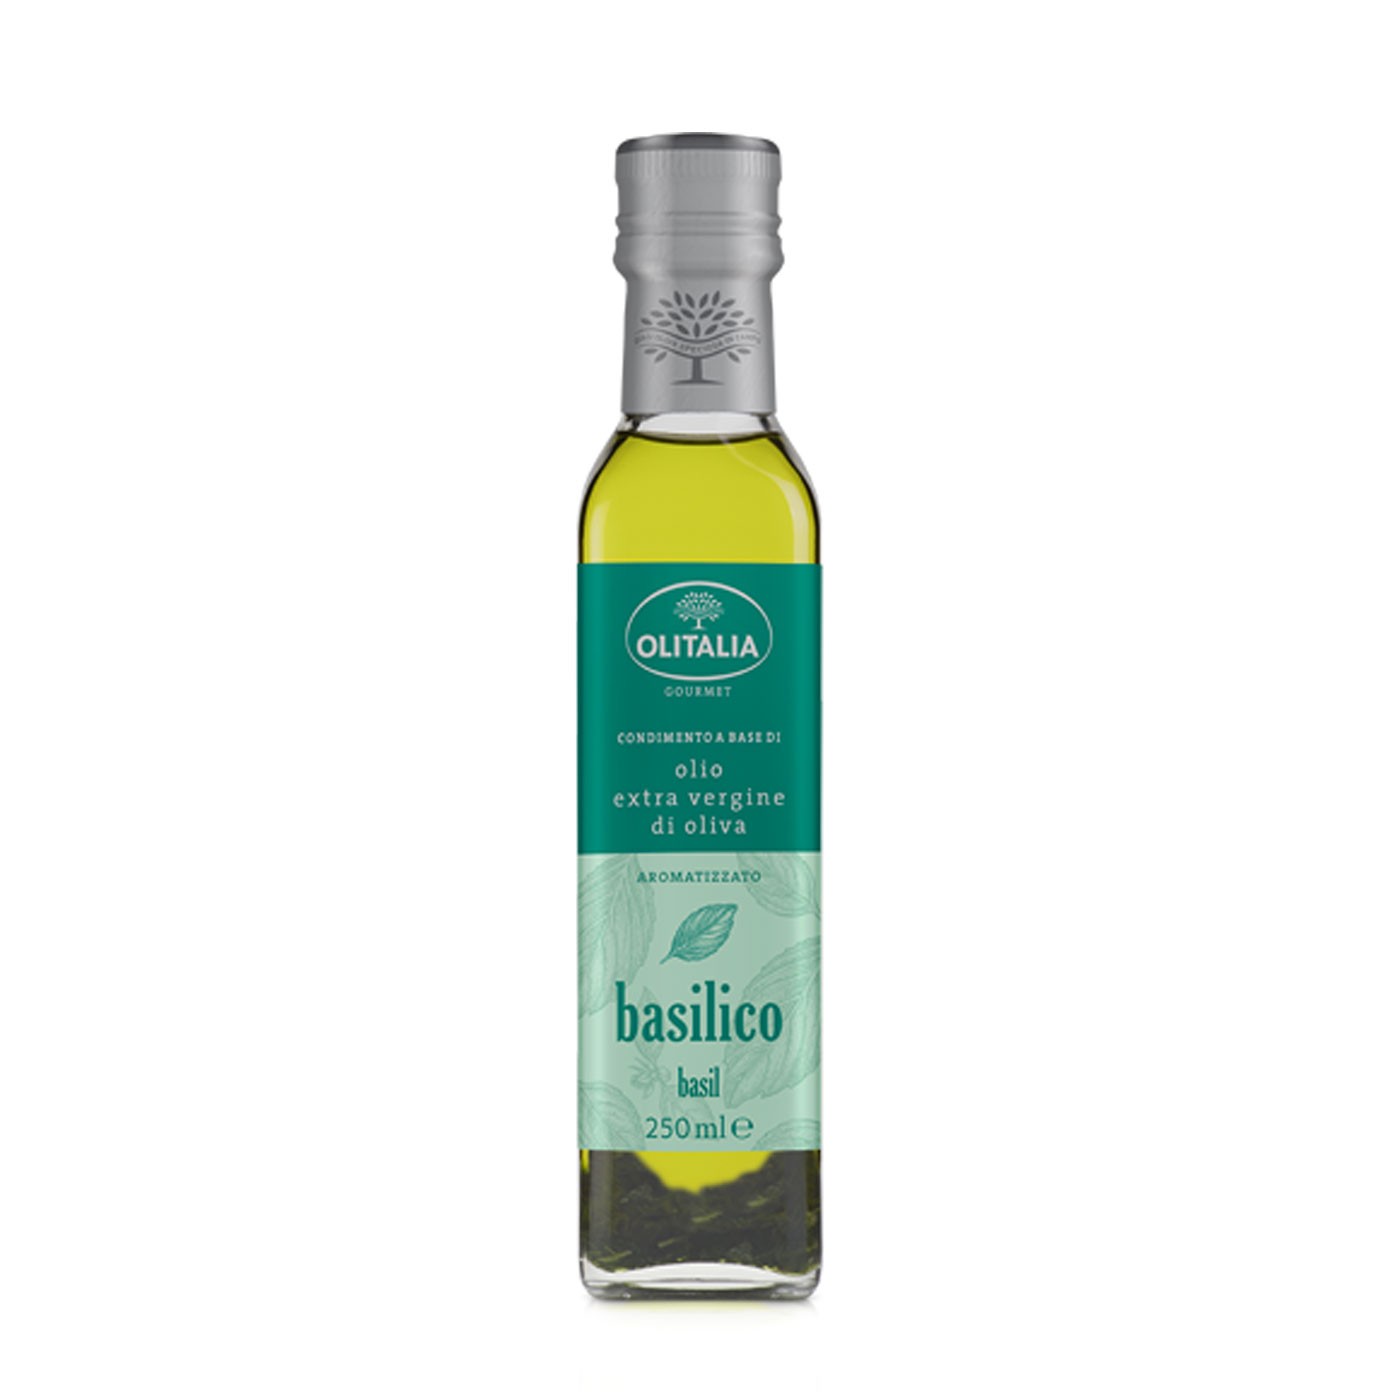 Basil Infused Extra Virgin Olive Oil 8.4 oz